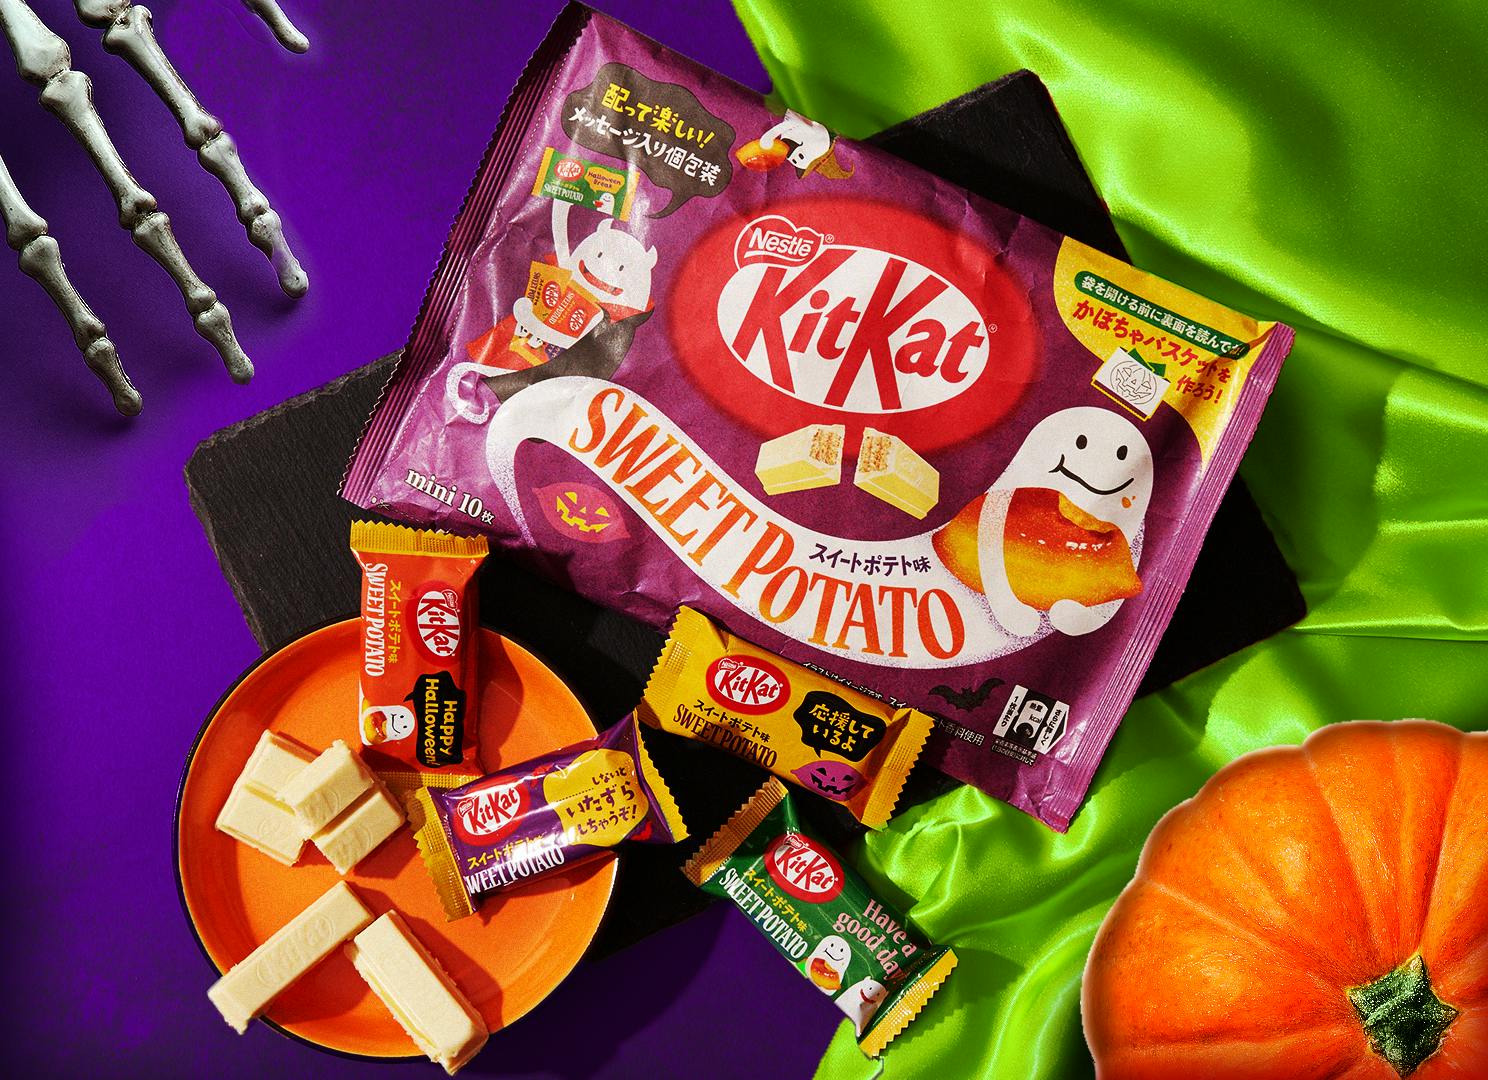 KitKat Sweet Potato item sits on a purple & electric green background, alongside other Halloween motifs like pumpkins and skeletons.